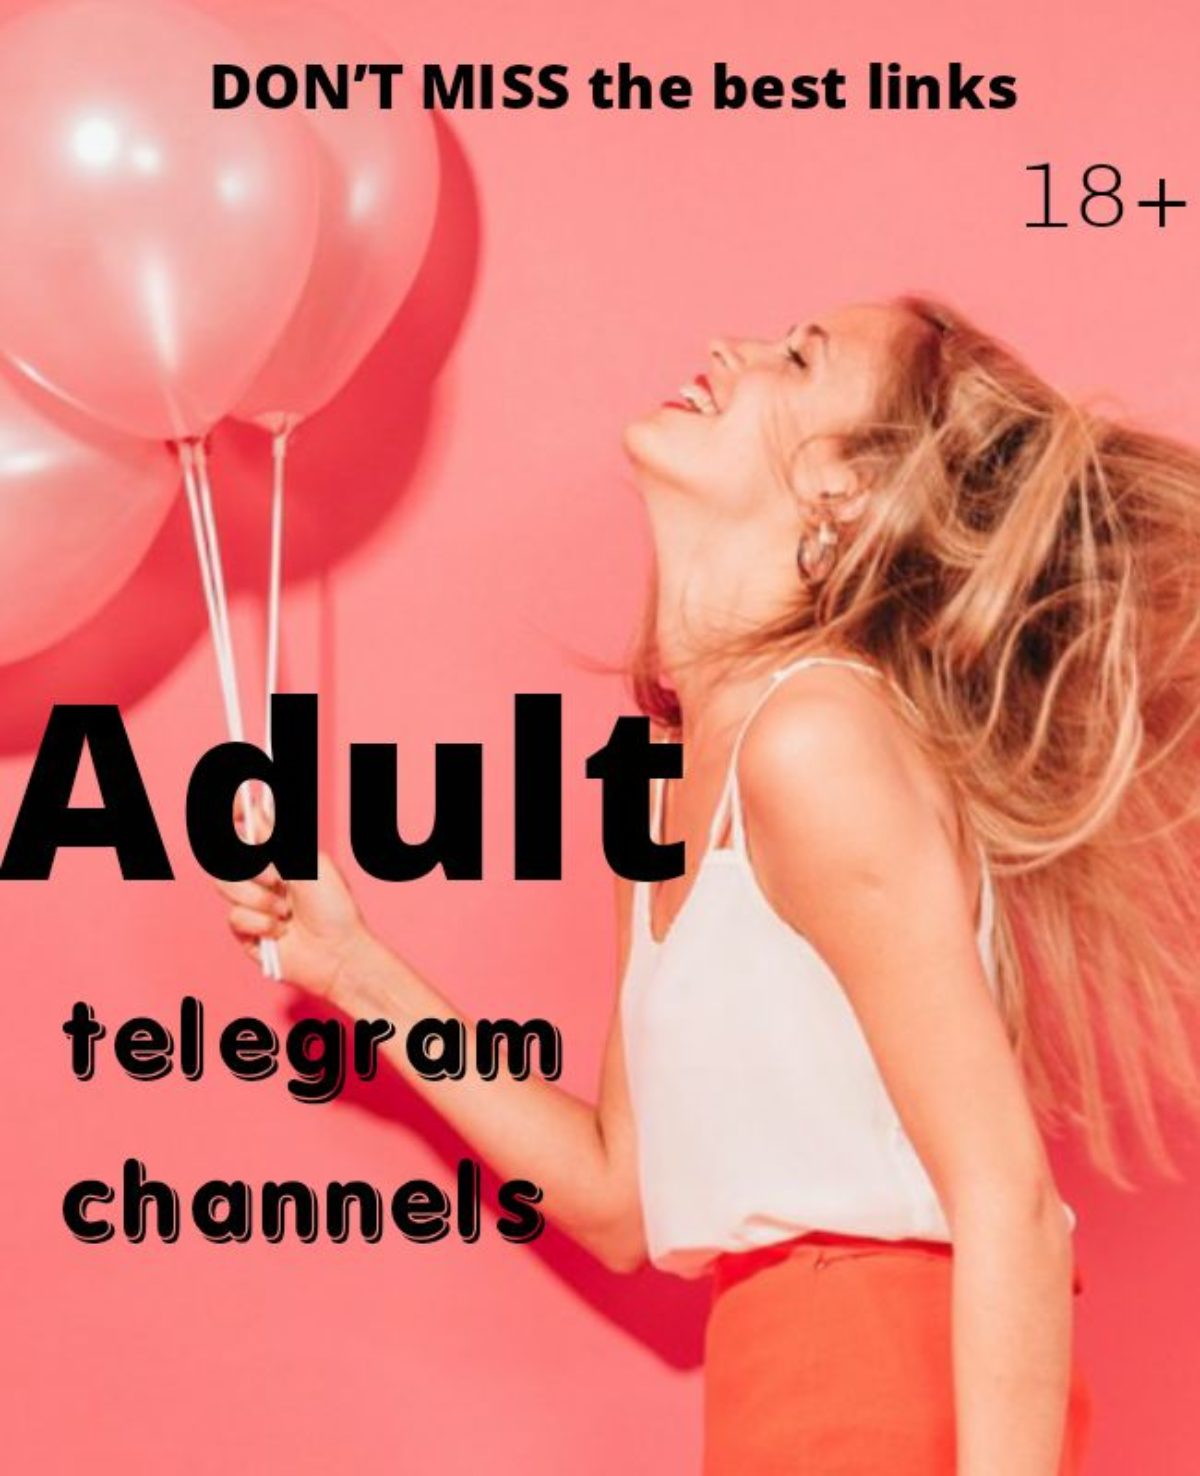 Best adult telegram channels 2021 - Telegram GURU